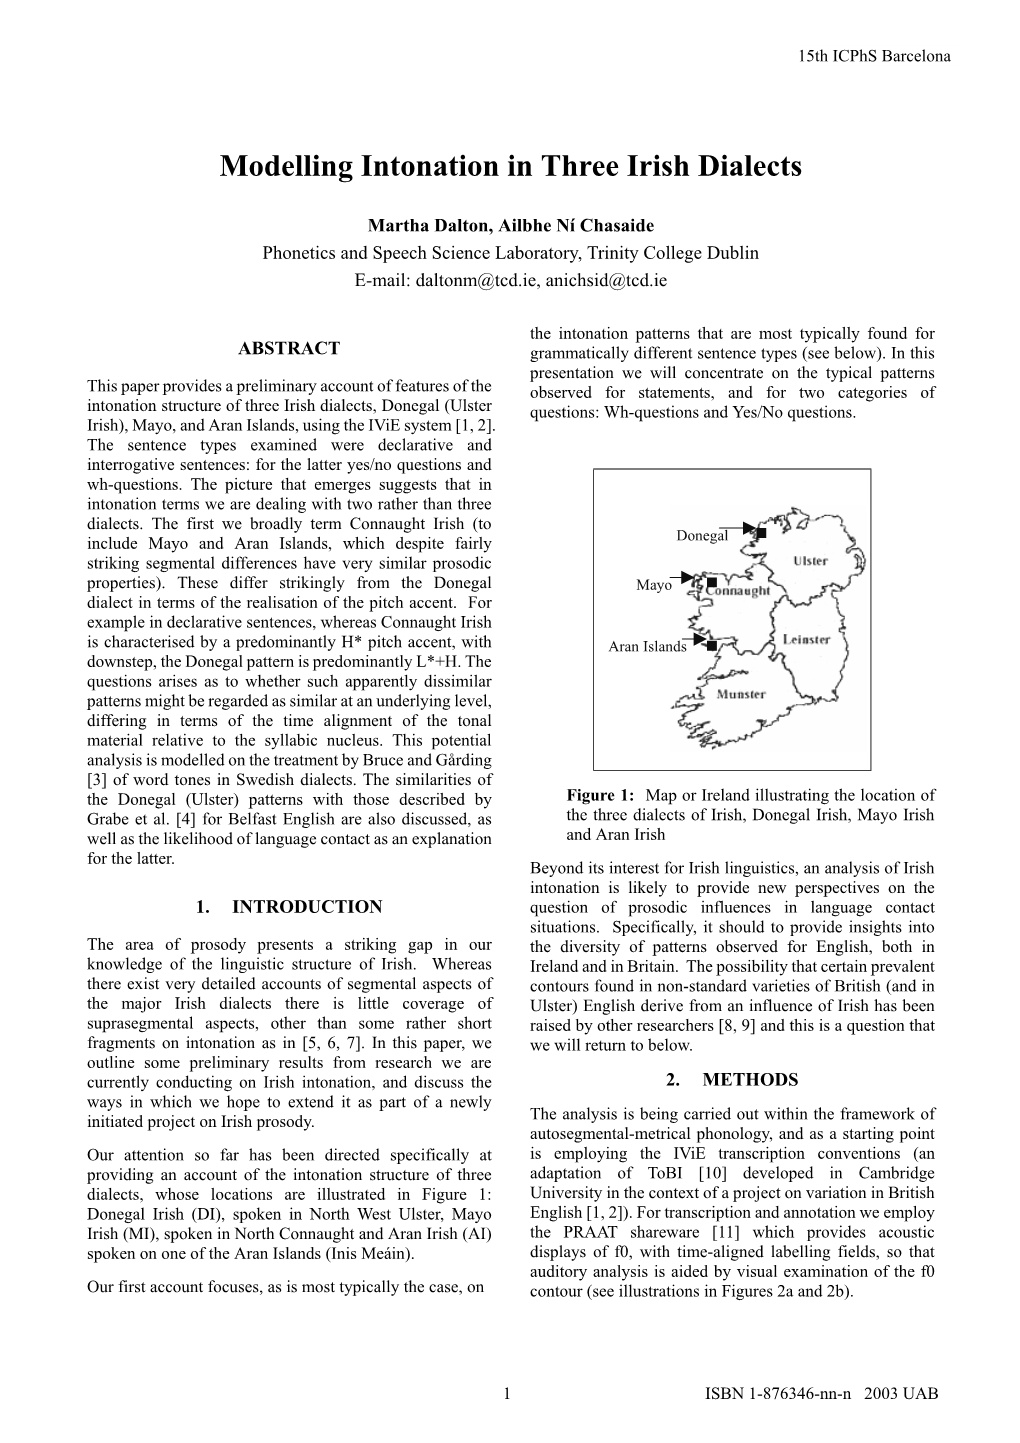 Modelling Intonation in Three Irish Dialects (PDF, 197Kb)